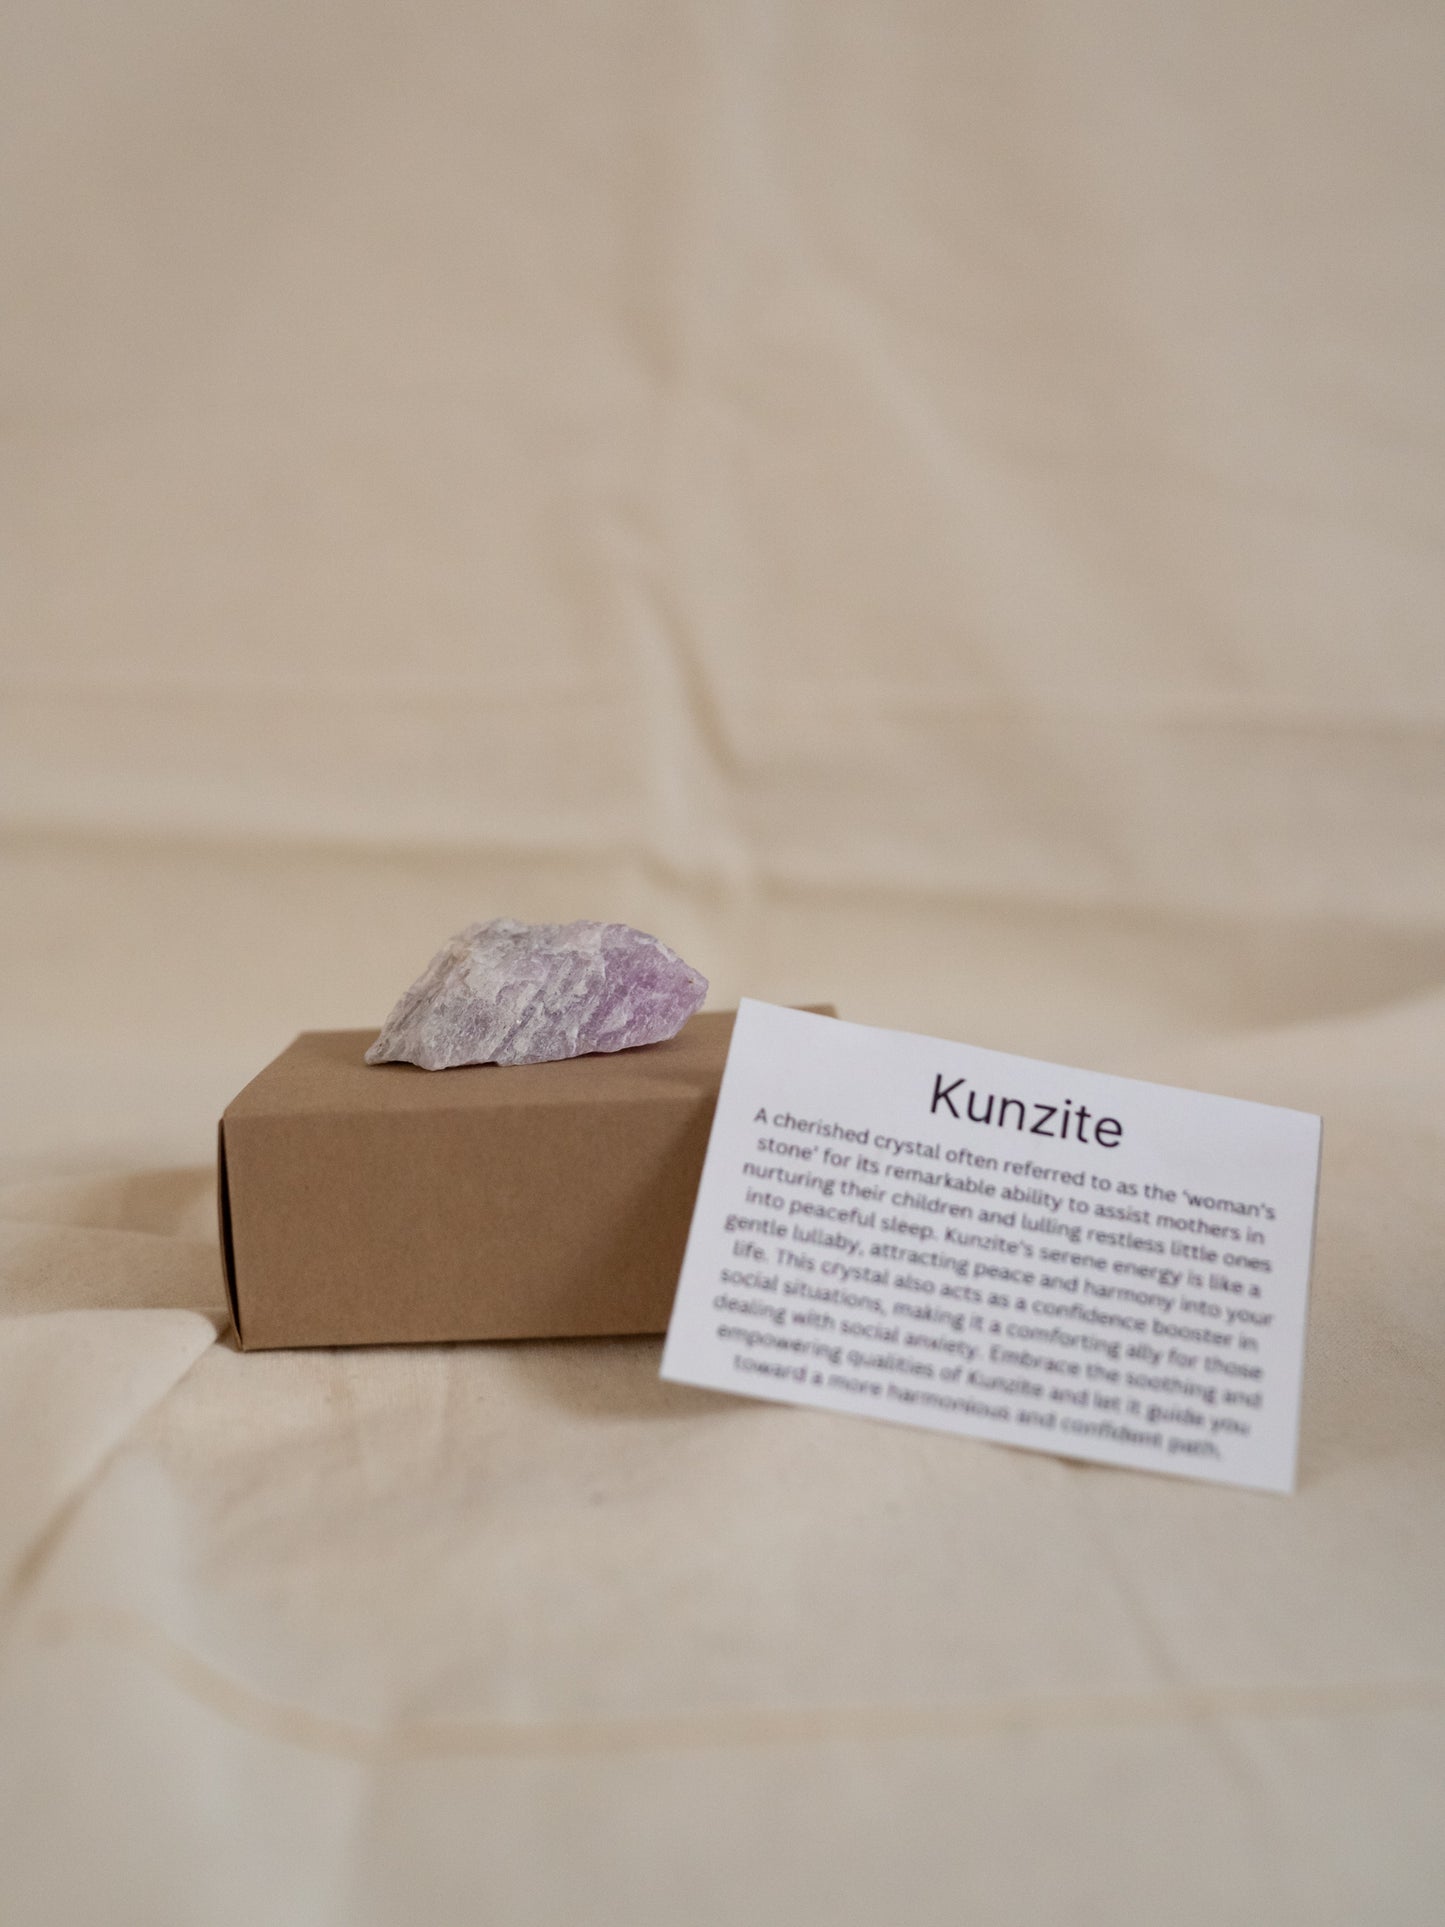 Raw Kunzite Crystal With Gift Box